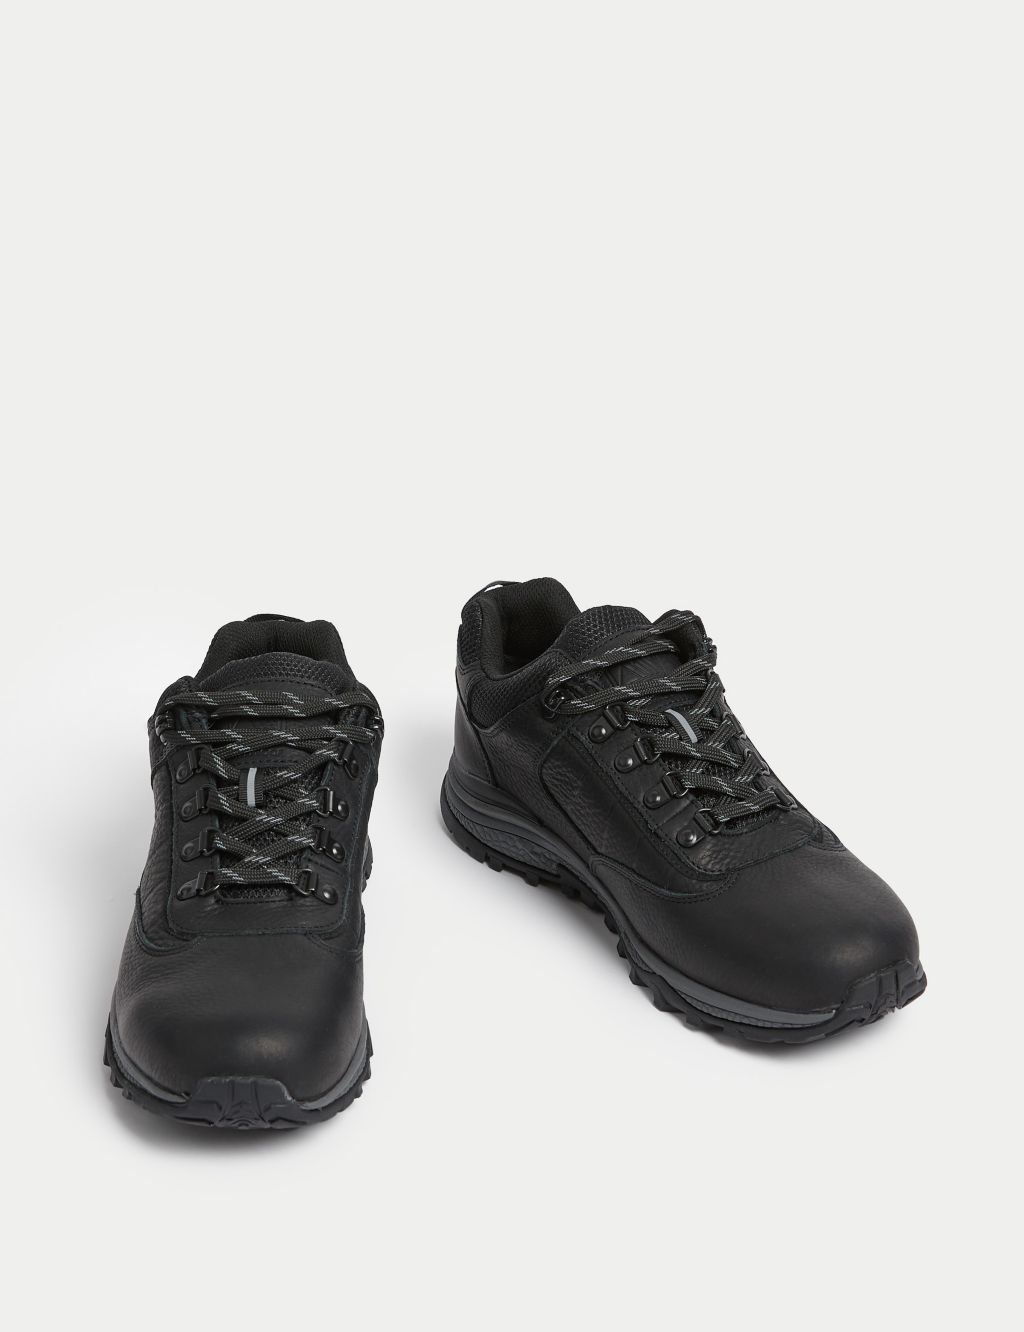 Leather Waterproof Walking Shoes image 2